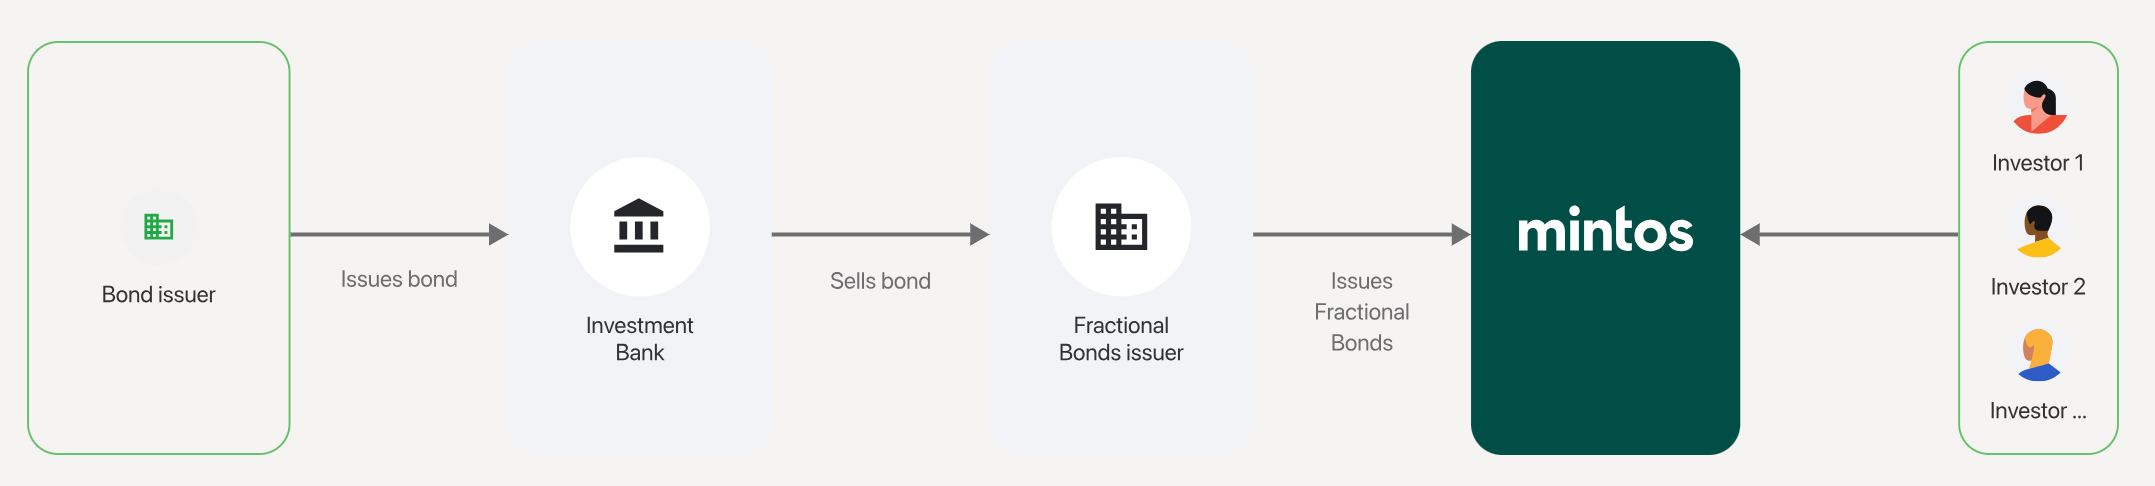 fractional-bonds-mintos